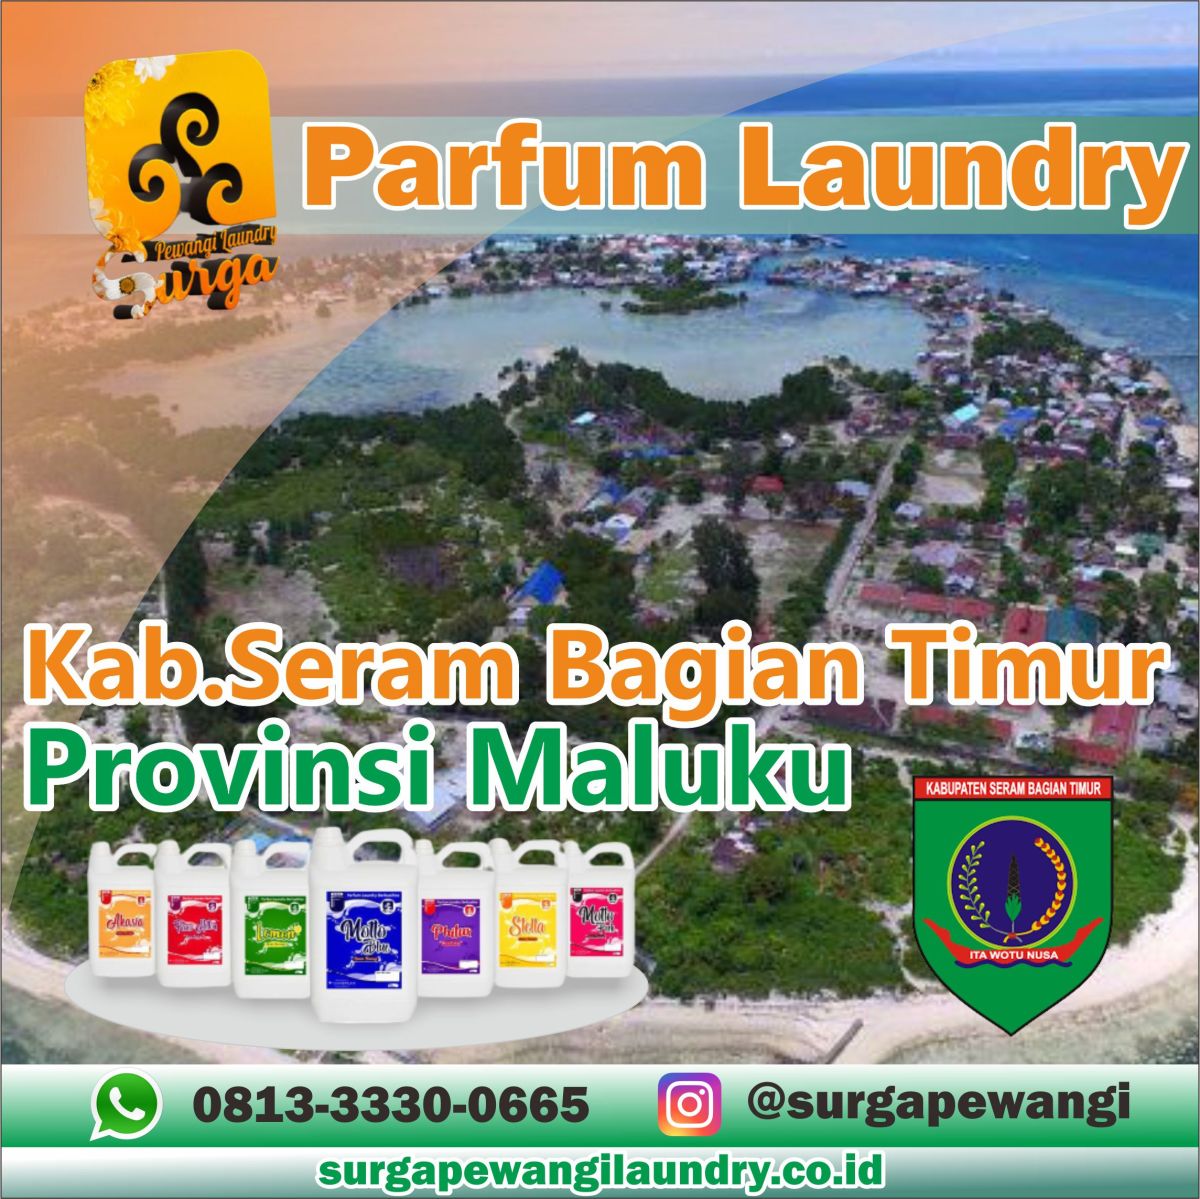 Parfum Laundry kabupaten Seram Bagian Timur, Maluku